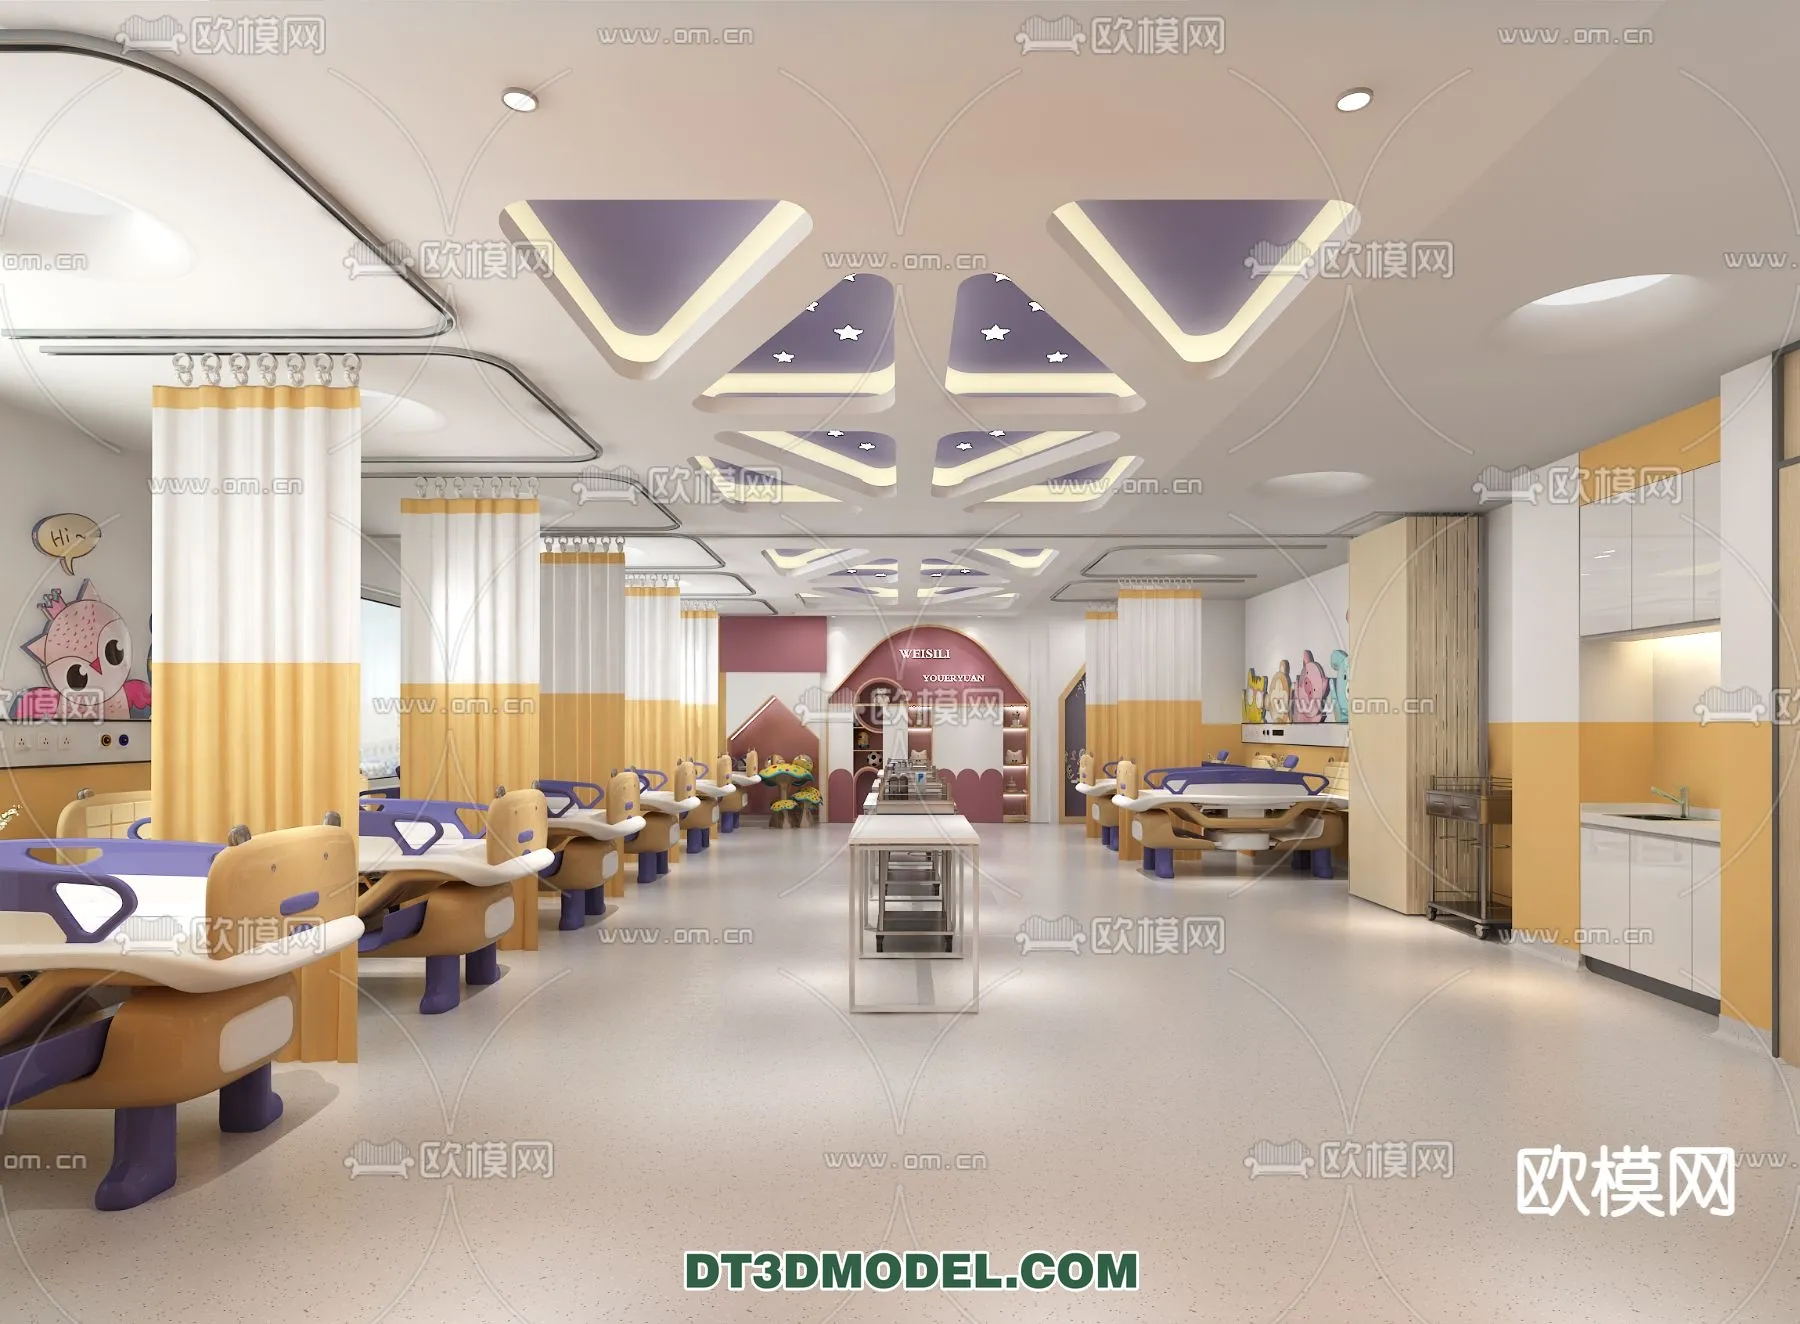 HOSPITAL 3D SCENES – MODERN – 0171